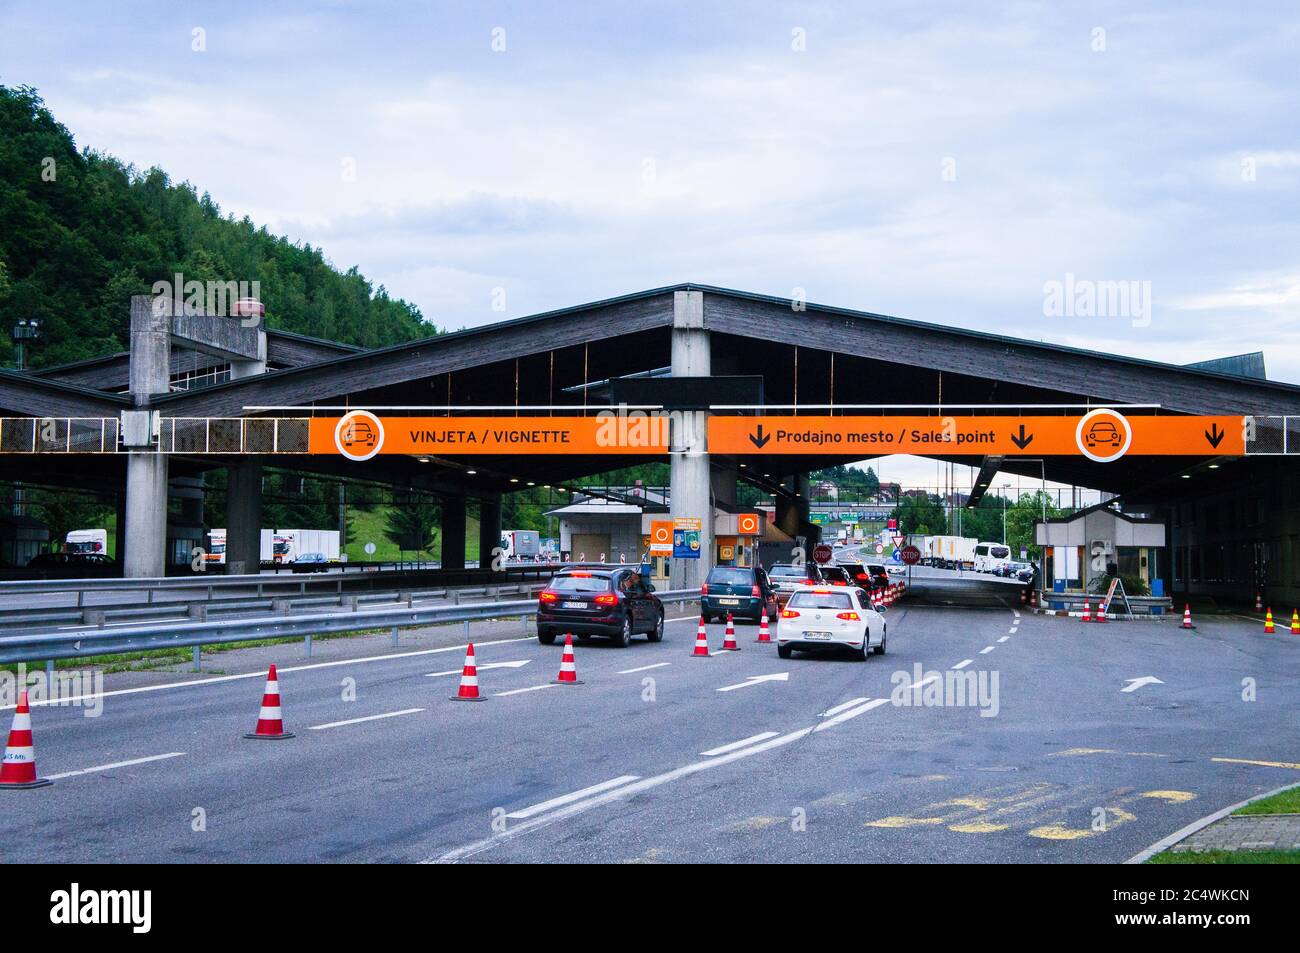 Slowenien Highway Vignette Sales Point, Spielfeld/Sentilj Grenzübergang Österreich - Slowenien, AUT-SLO, 19. Juni 2020. (CTK Photo/Libor Sojka) Stockfoto